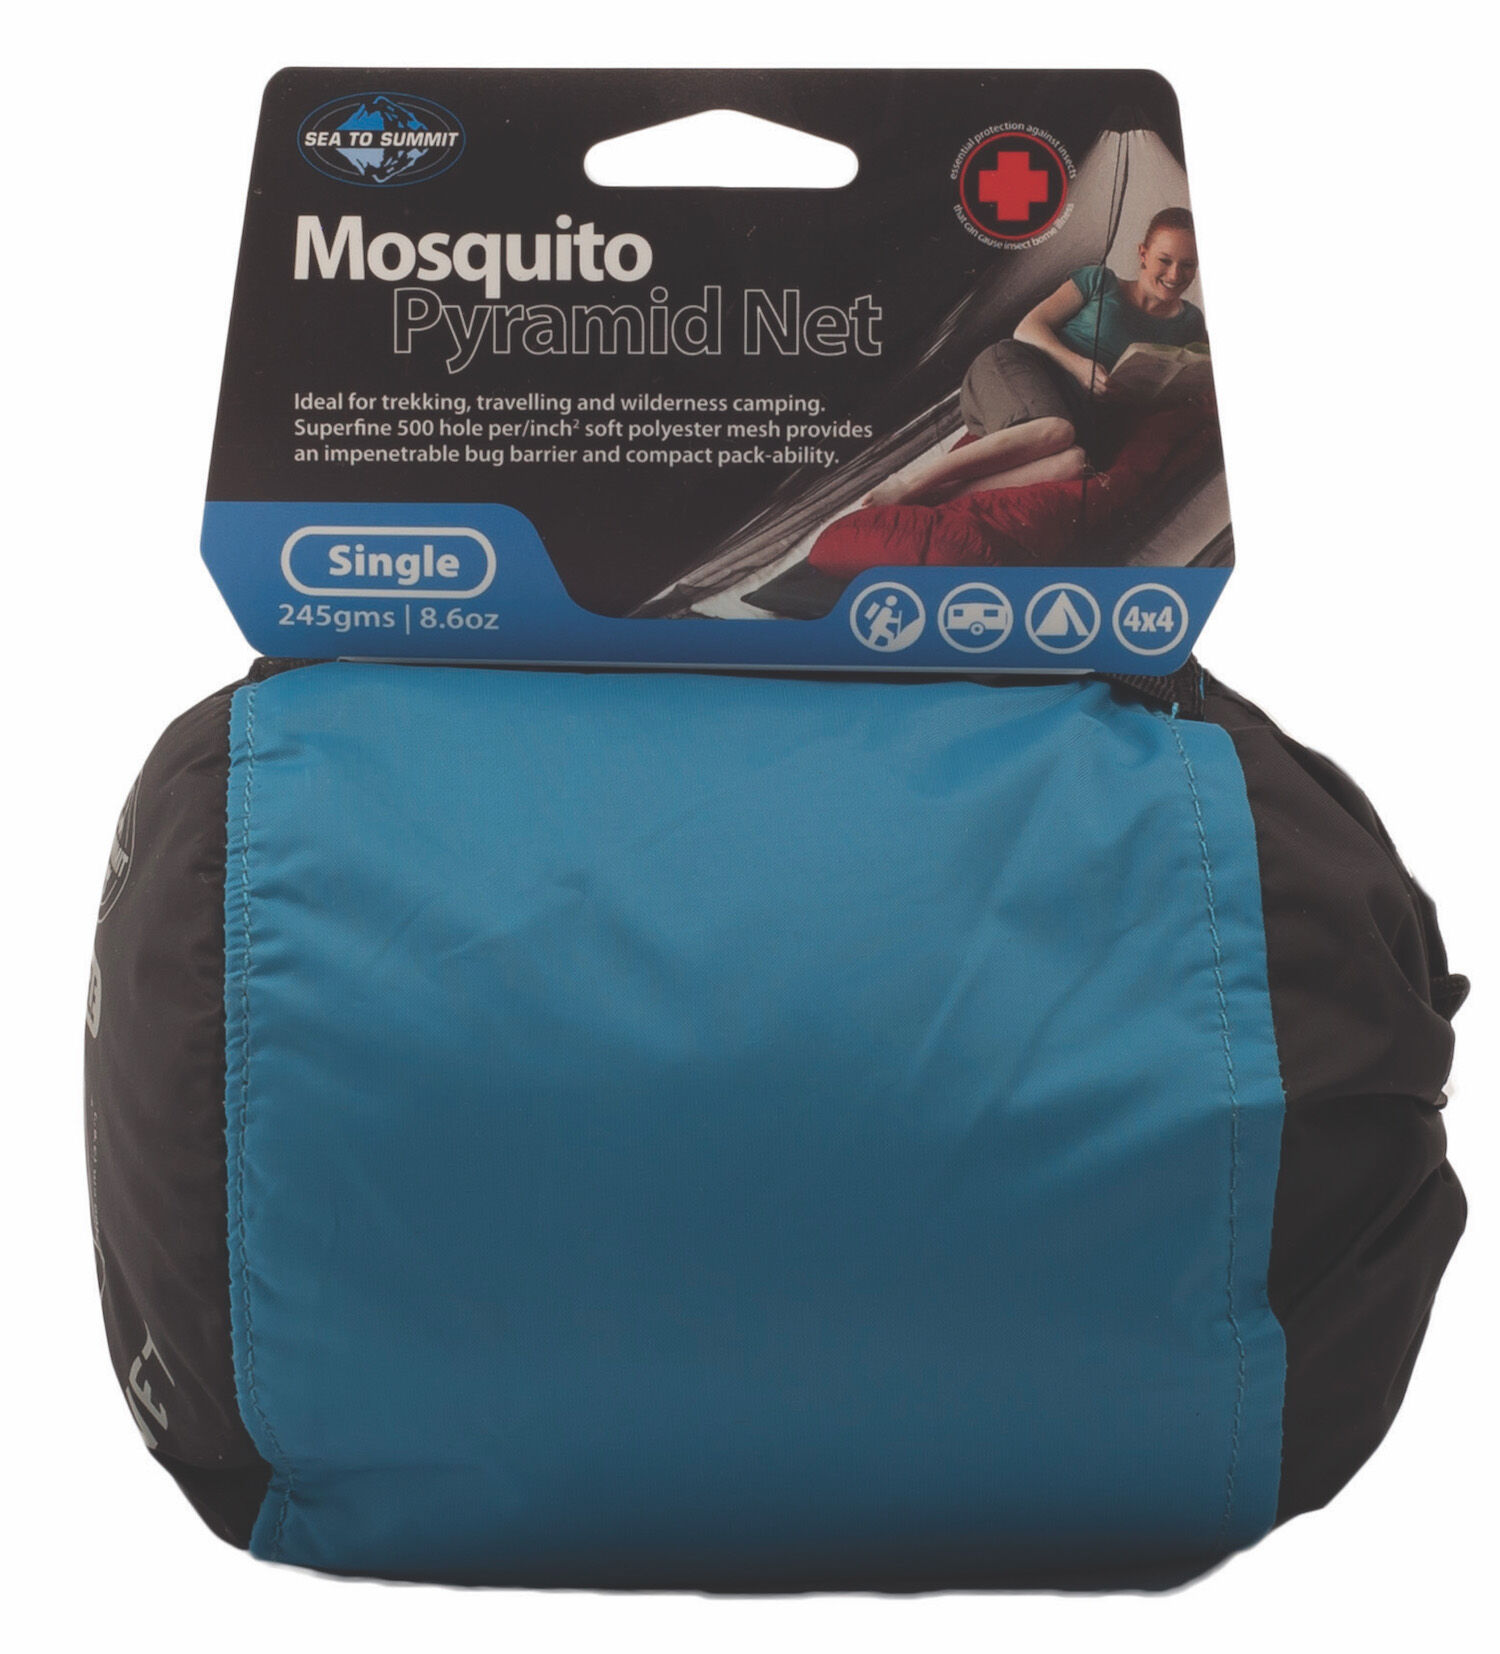 Sea To Summit - Simple Mosquito Pyramid Net Single - Mosquito net